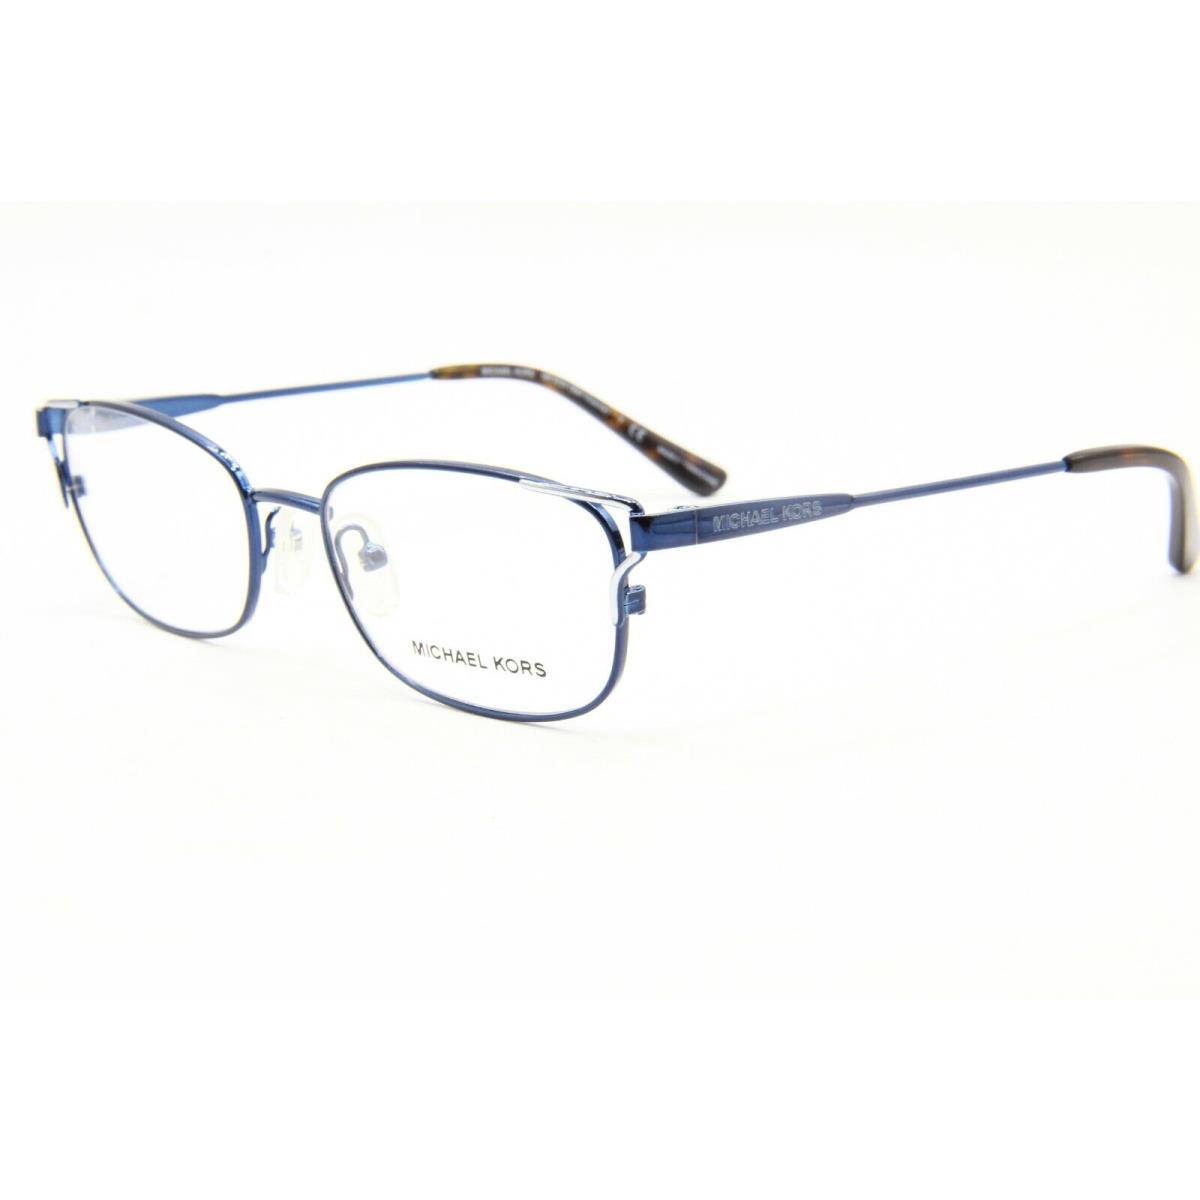 Michael Kors MK 3020 1211 Blue Eyeglasses Frame MK3020 RX 51-17